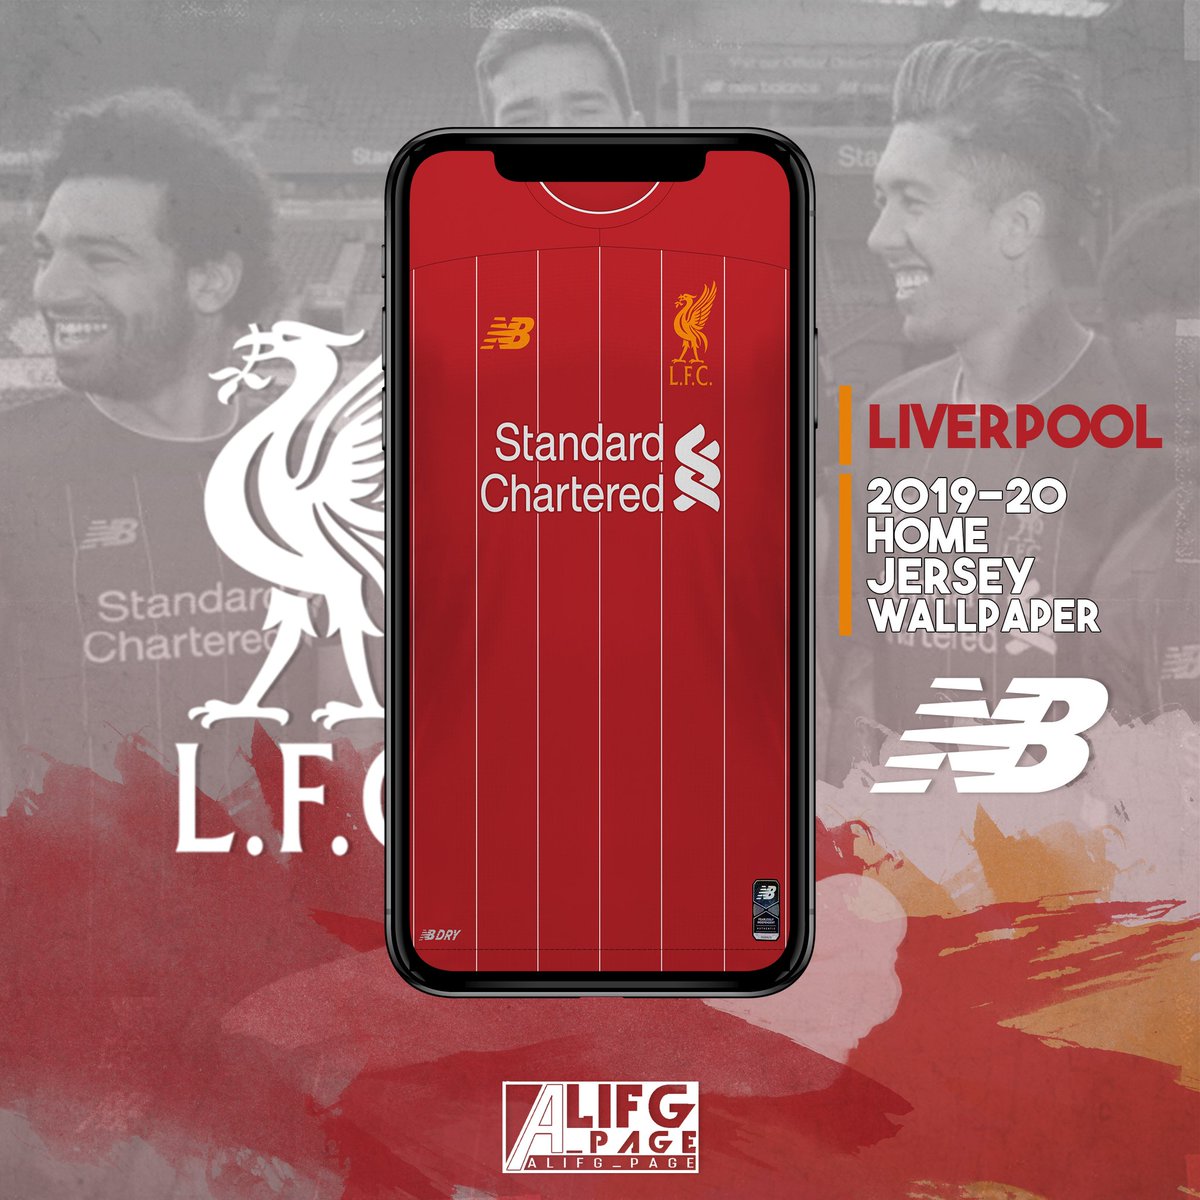 Liverpool 19 20 Jersey , HD Wallpaper & Backgrounds